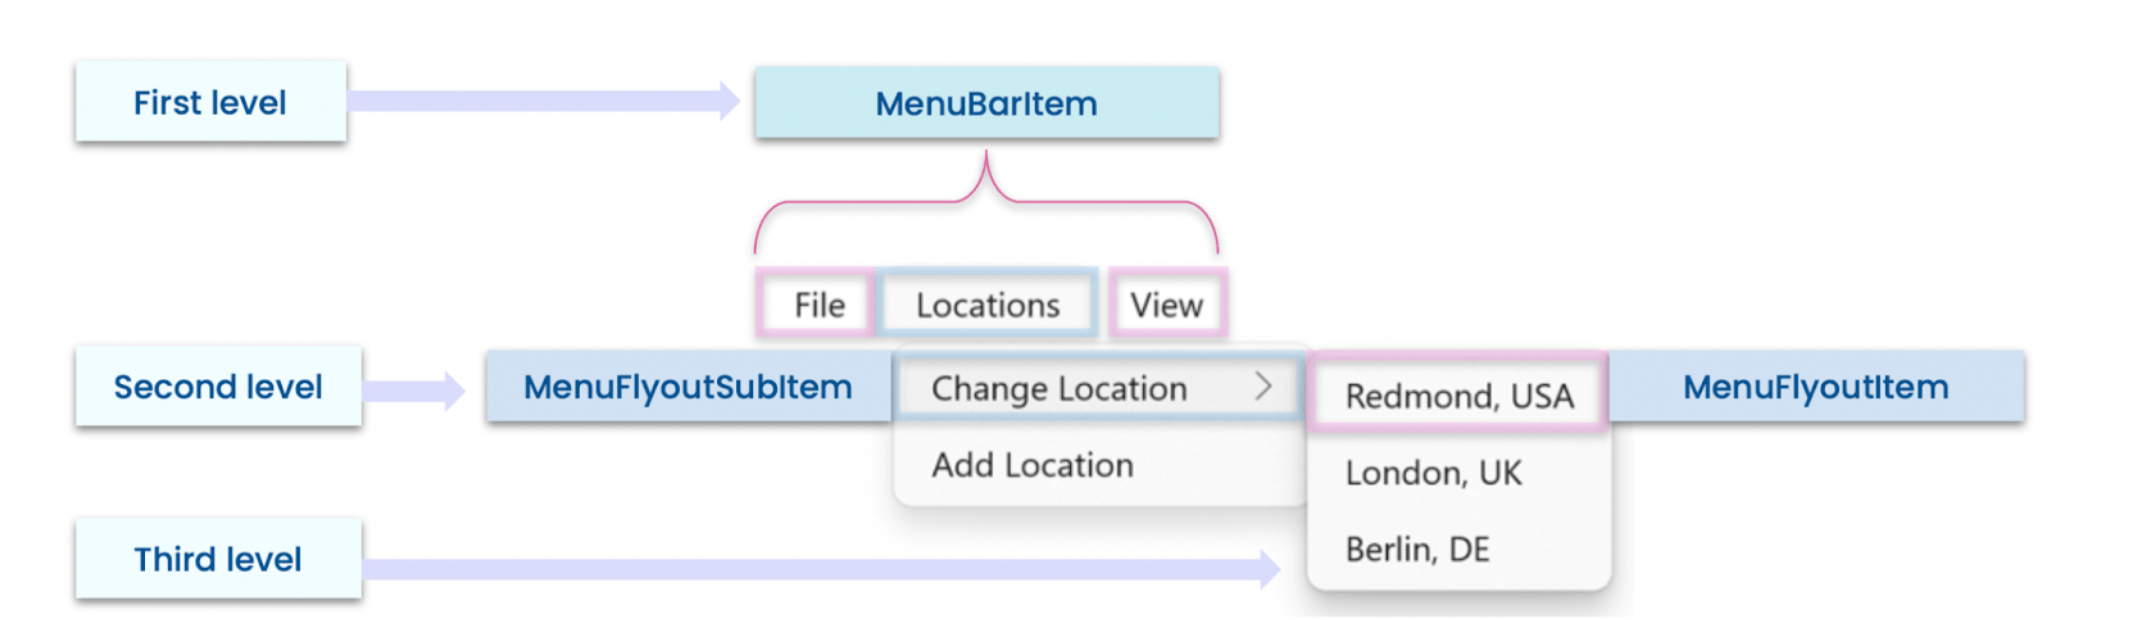 First level is MenuBarItem (File, Locations, View). Second level is MenuFlyoutSubItem (Change Location). Third level is MenuFlyoutItem (Redmond USA, London UK, Berlin DE)